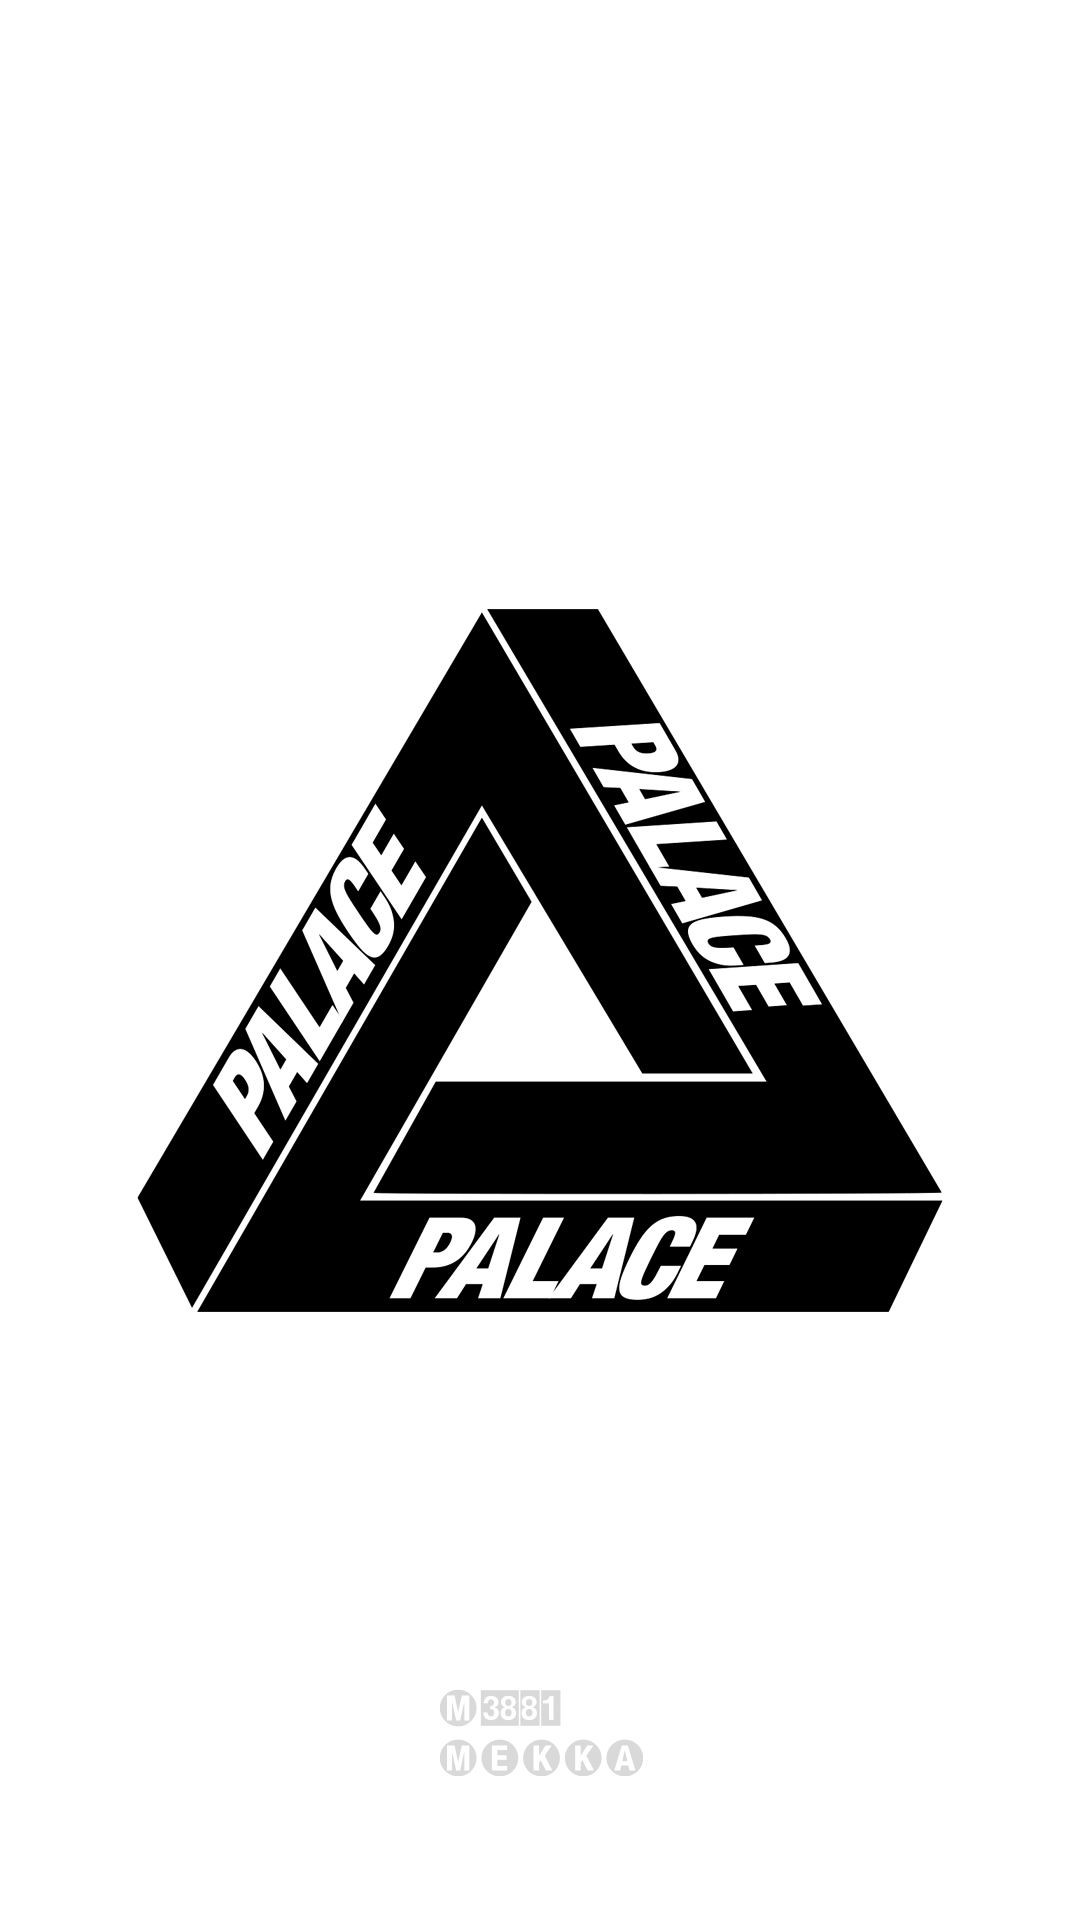 1080x1920, Palace Skateboards [m] Mekka Gallery 
 Data - Palace Skateboards - HD Wallpaper 